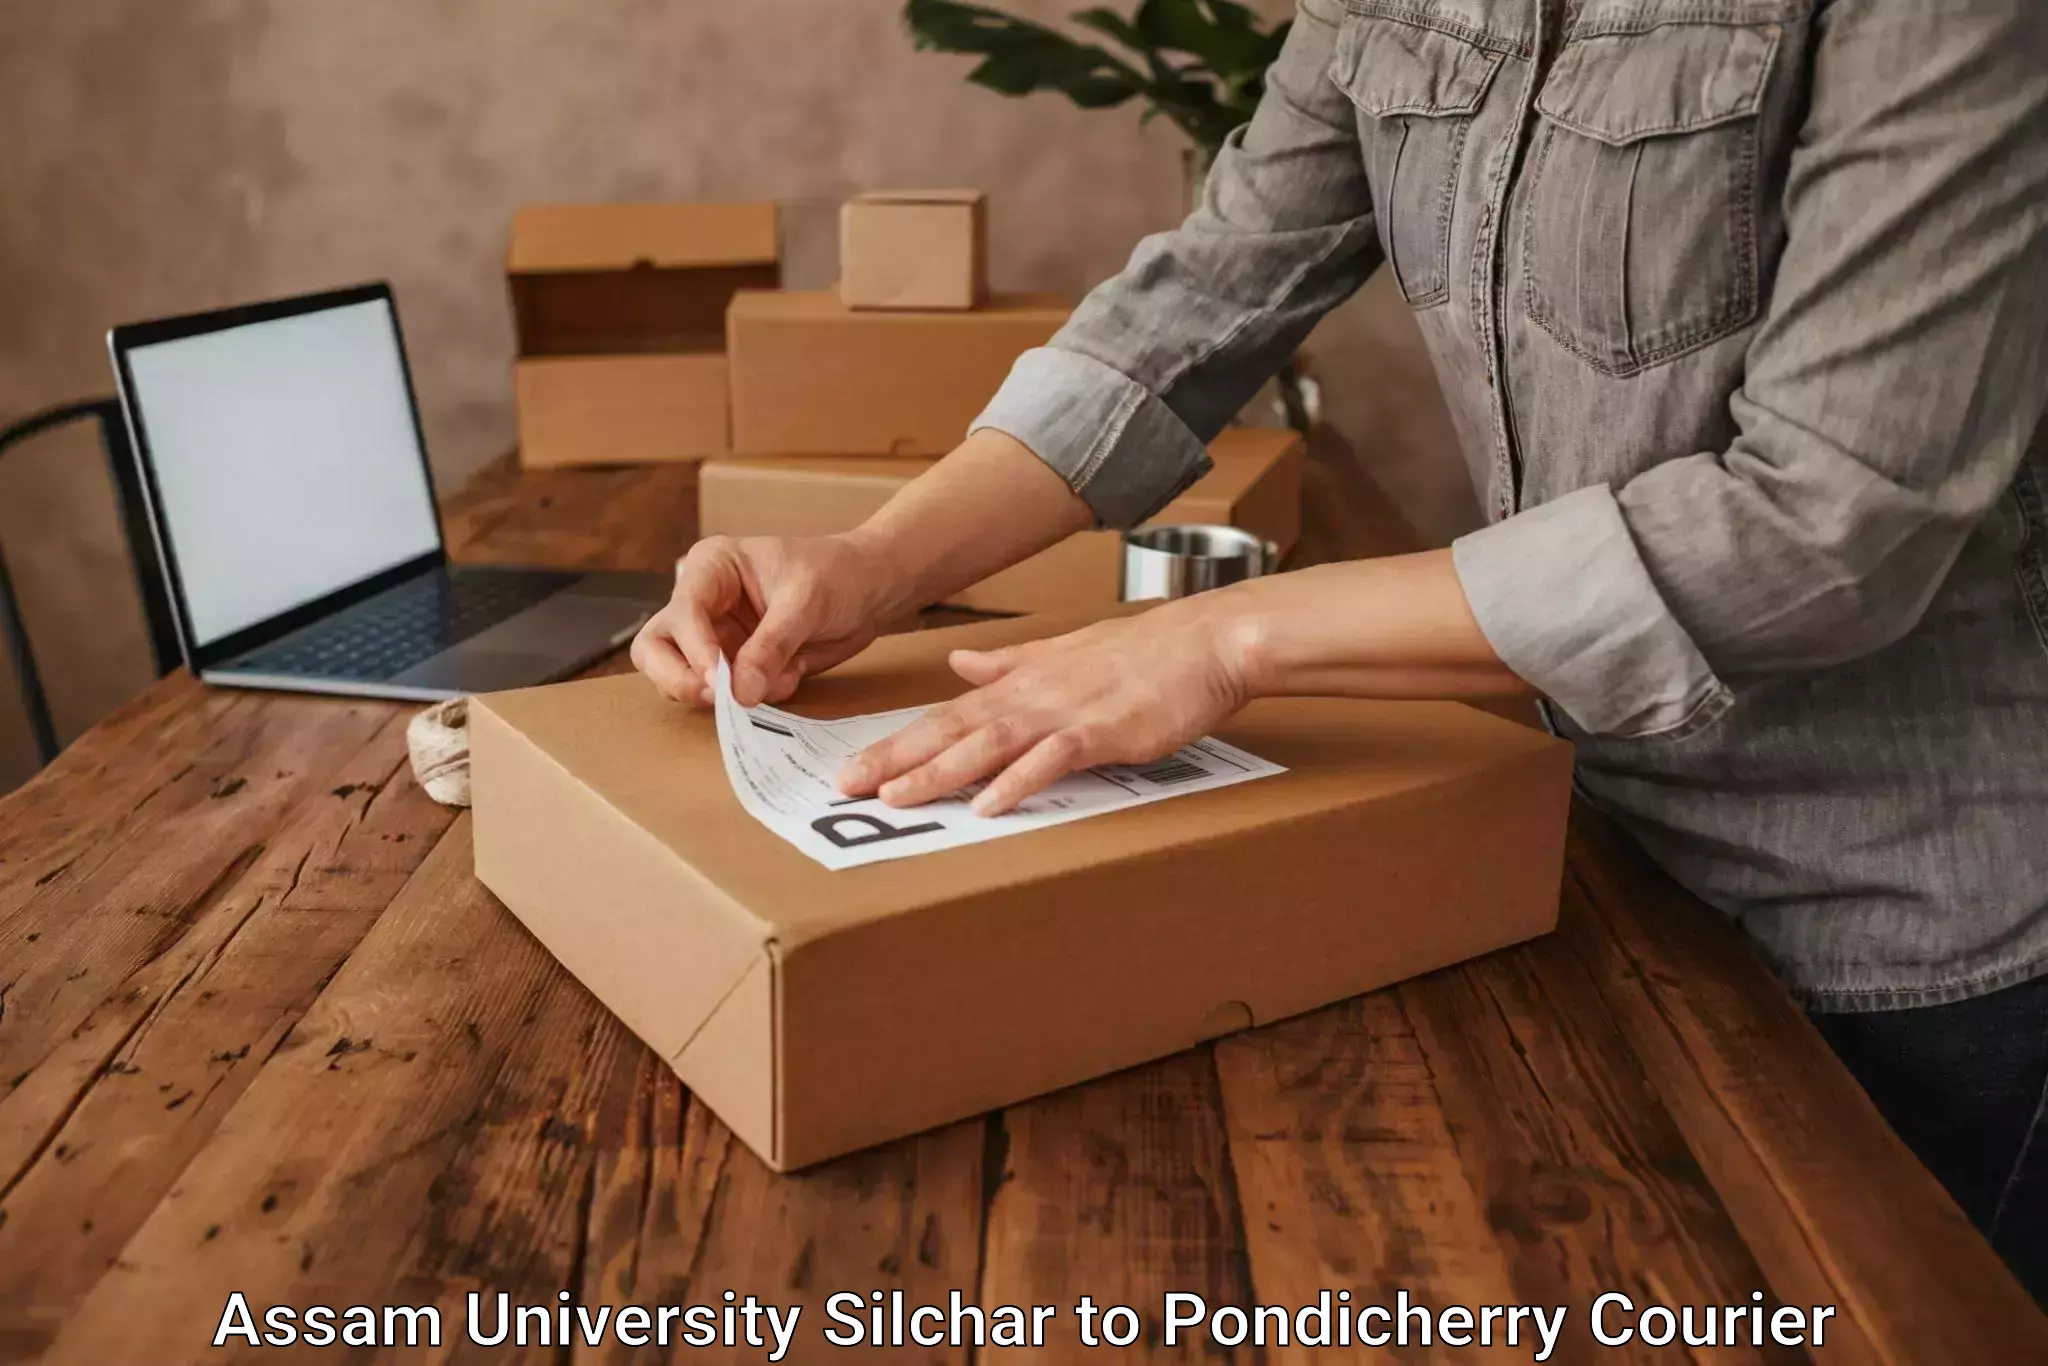 Package delivery network Assam University Silchar to Karaikal